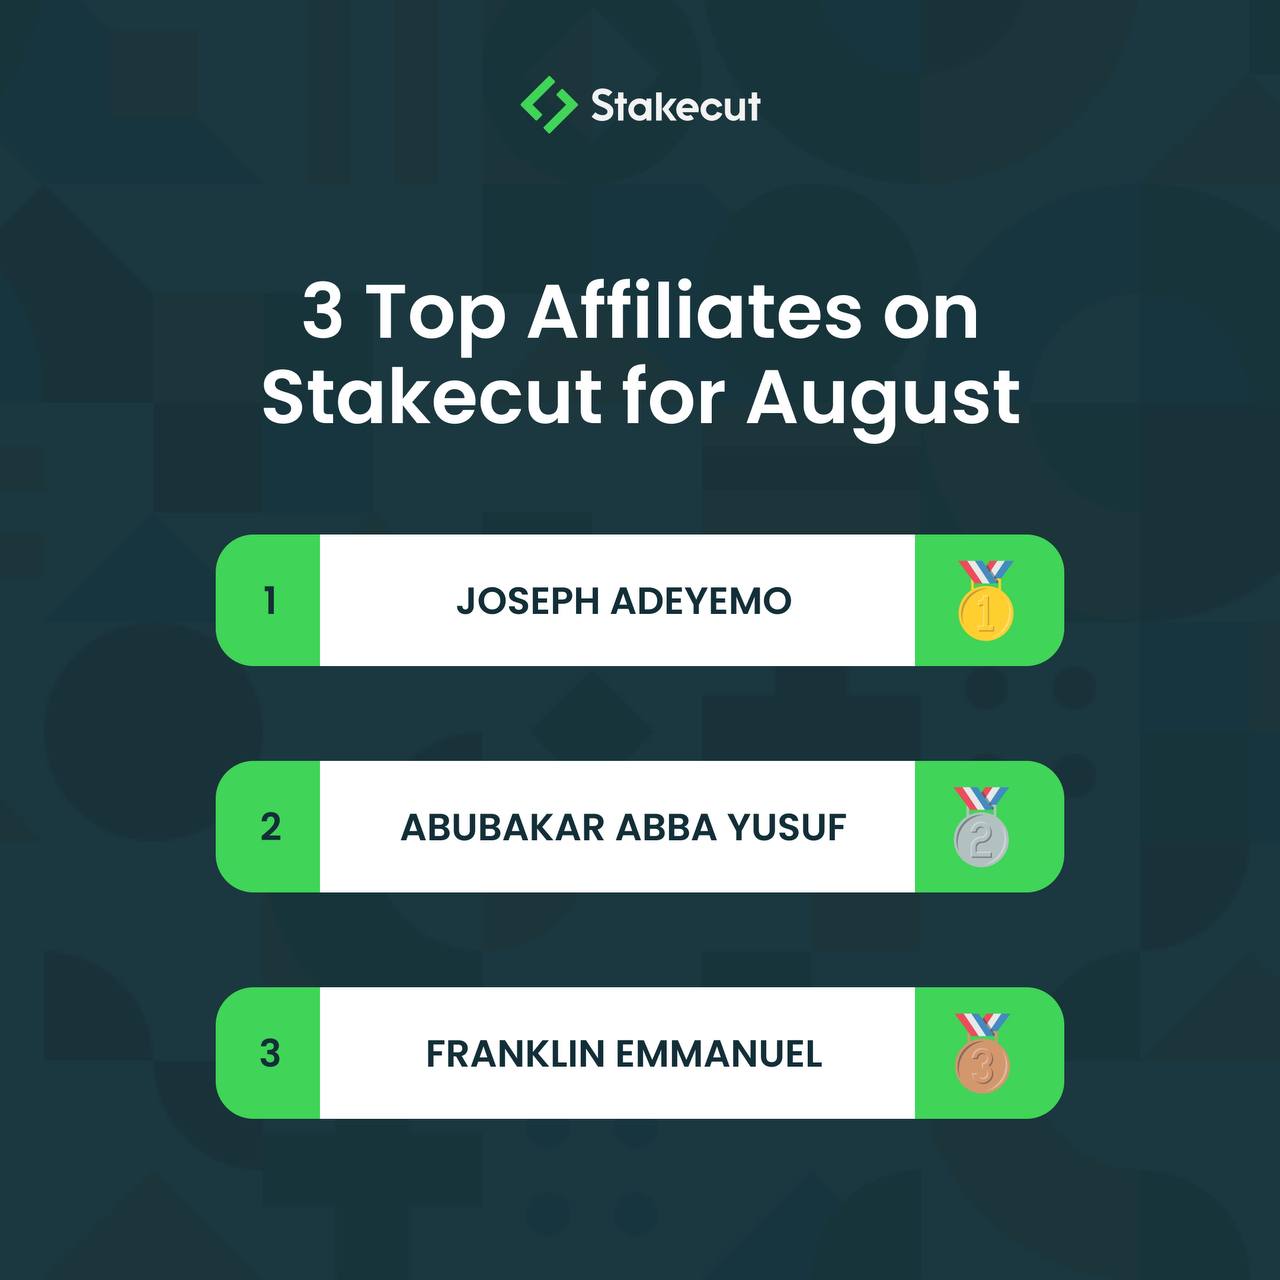 Top 3 Stakecut affiliates